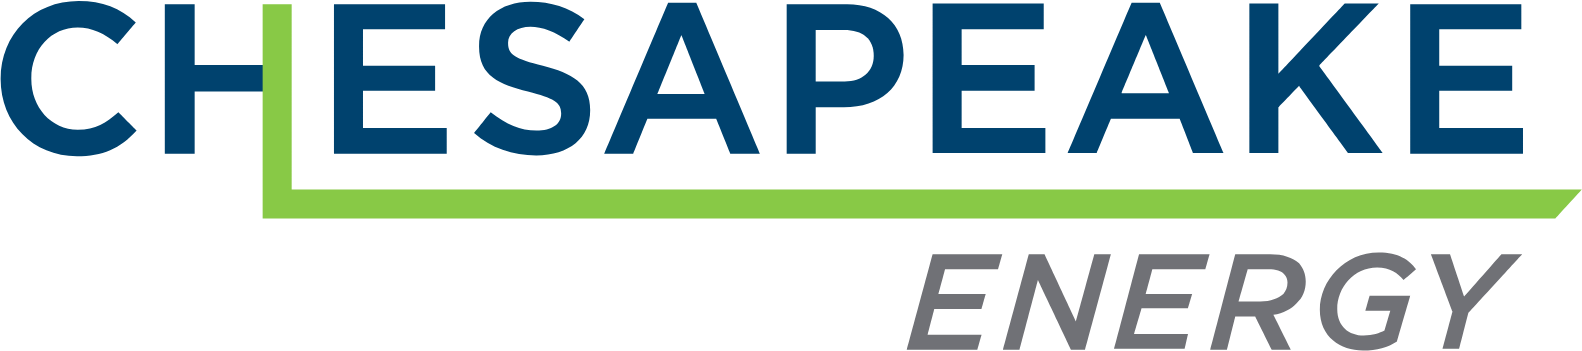 Chesapeake Energy
 logo large (transparent PNG)